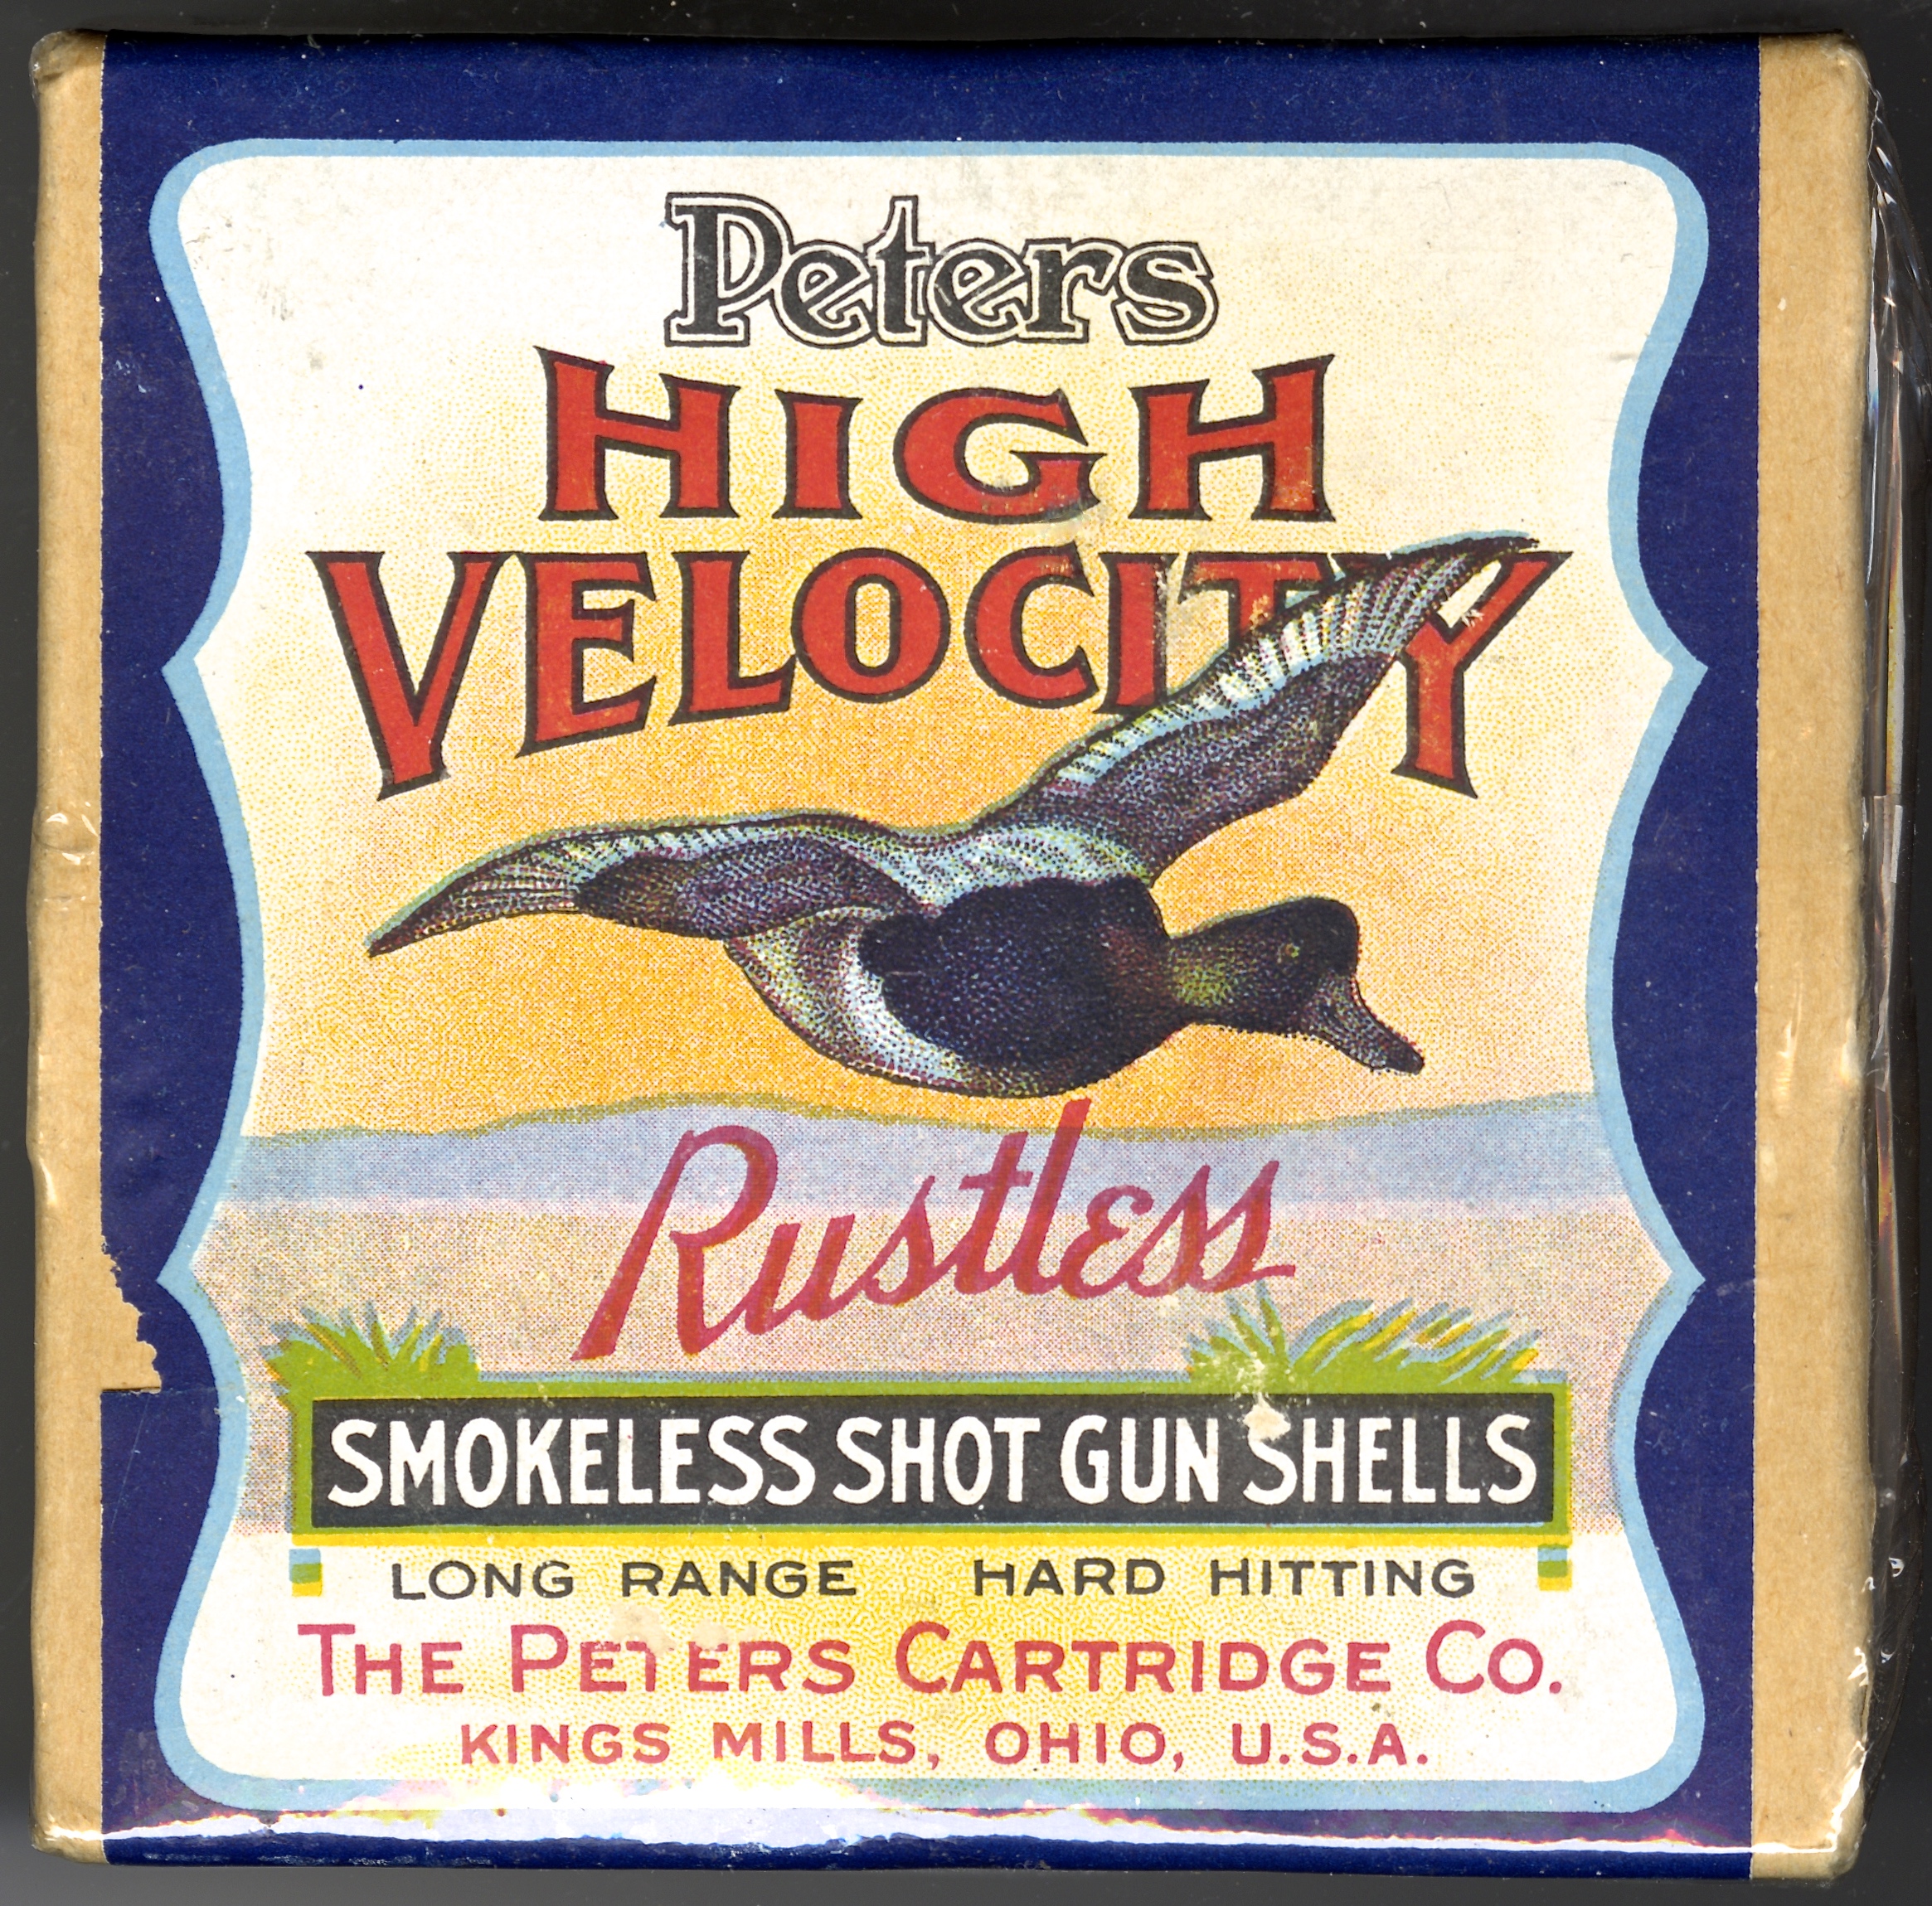 Peters High Velocity Smokeless Shot Gun Shells Box